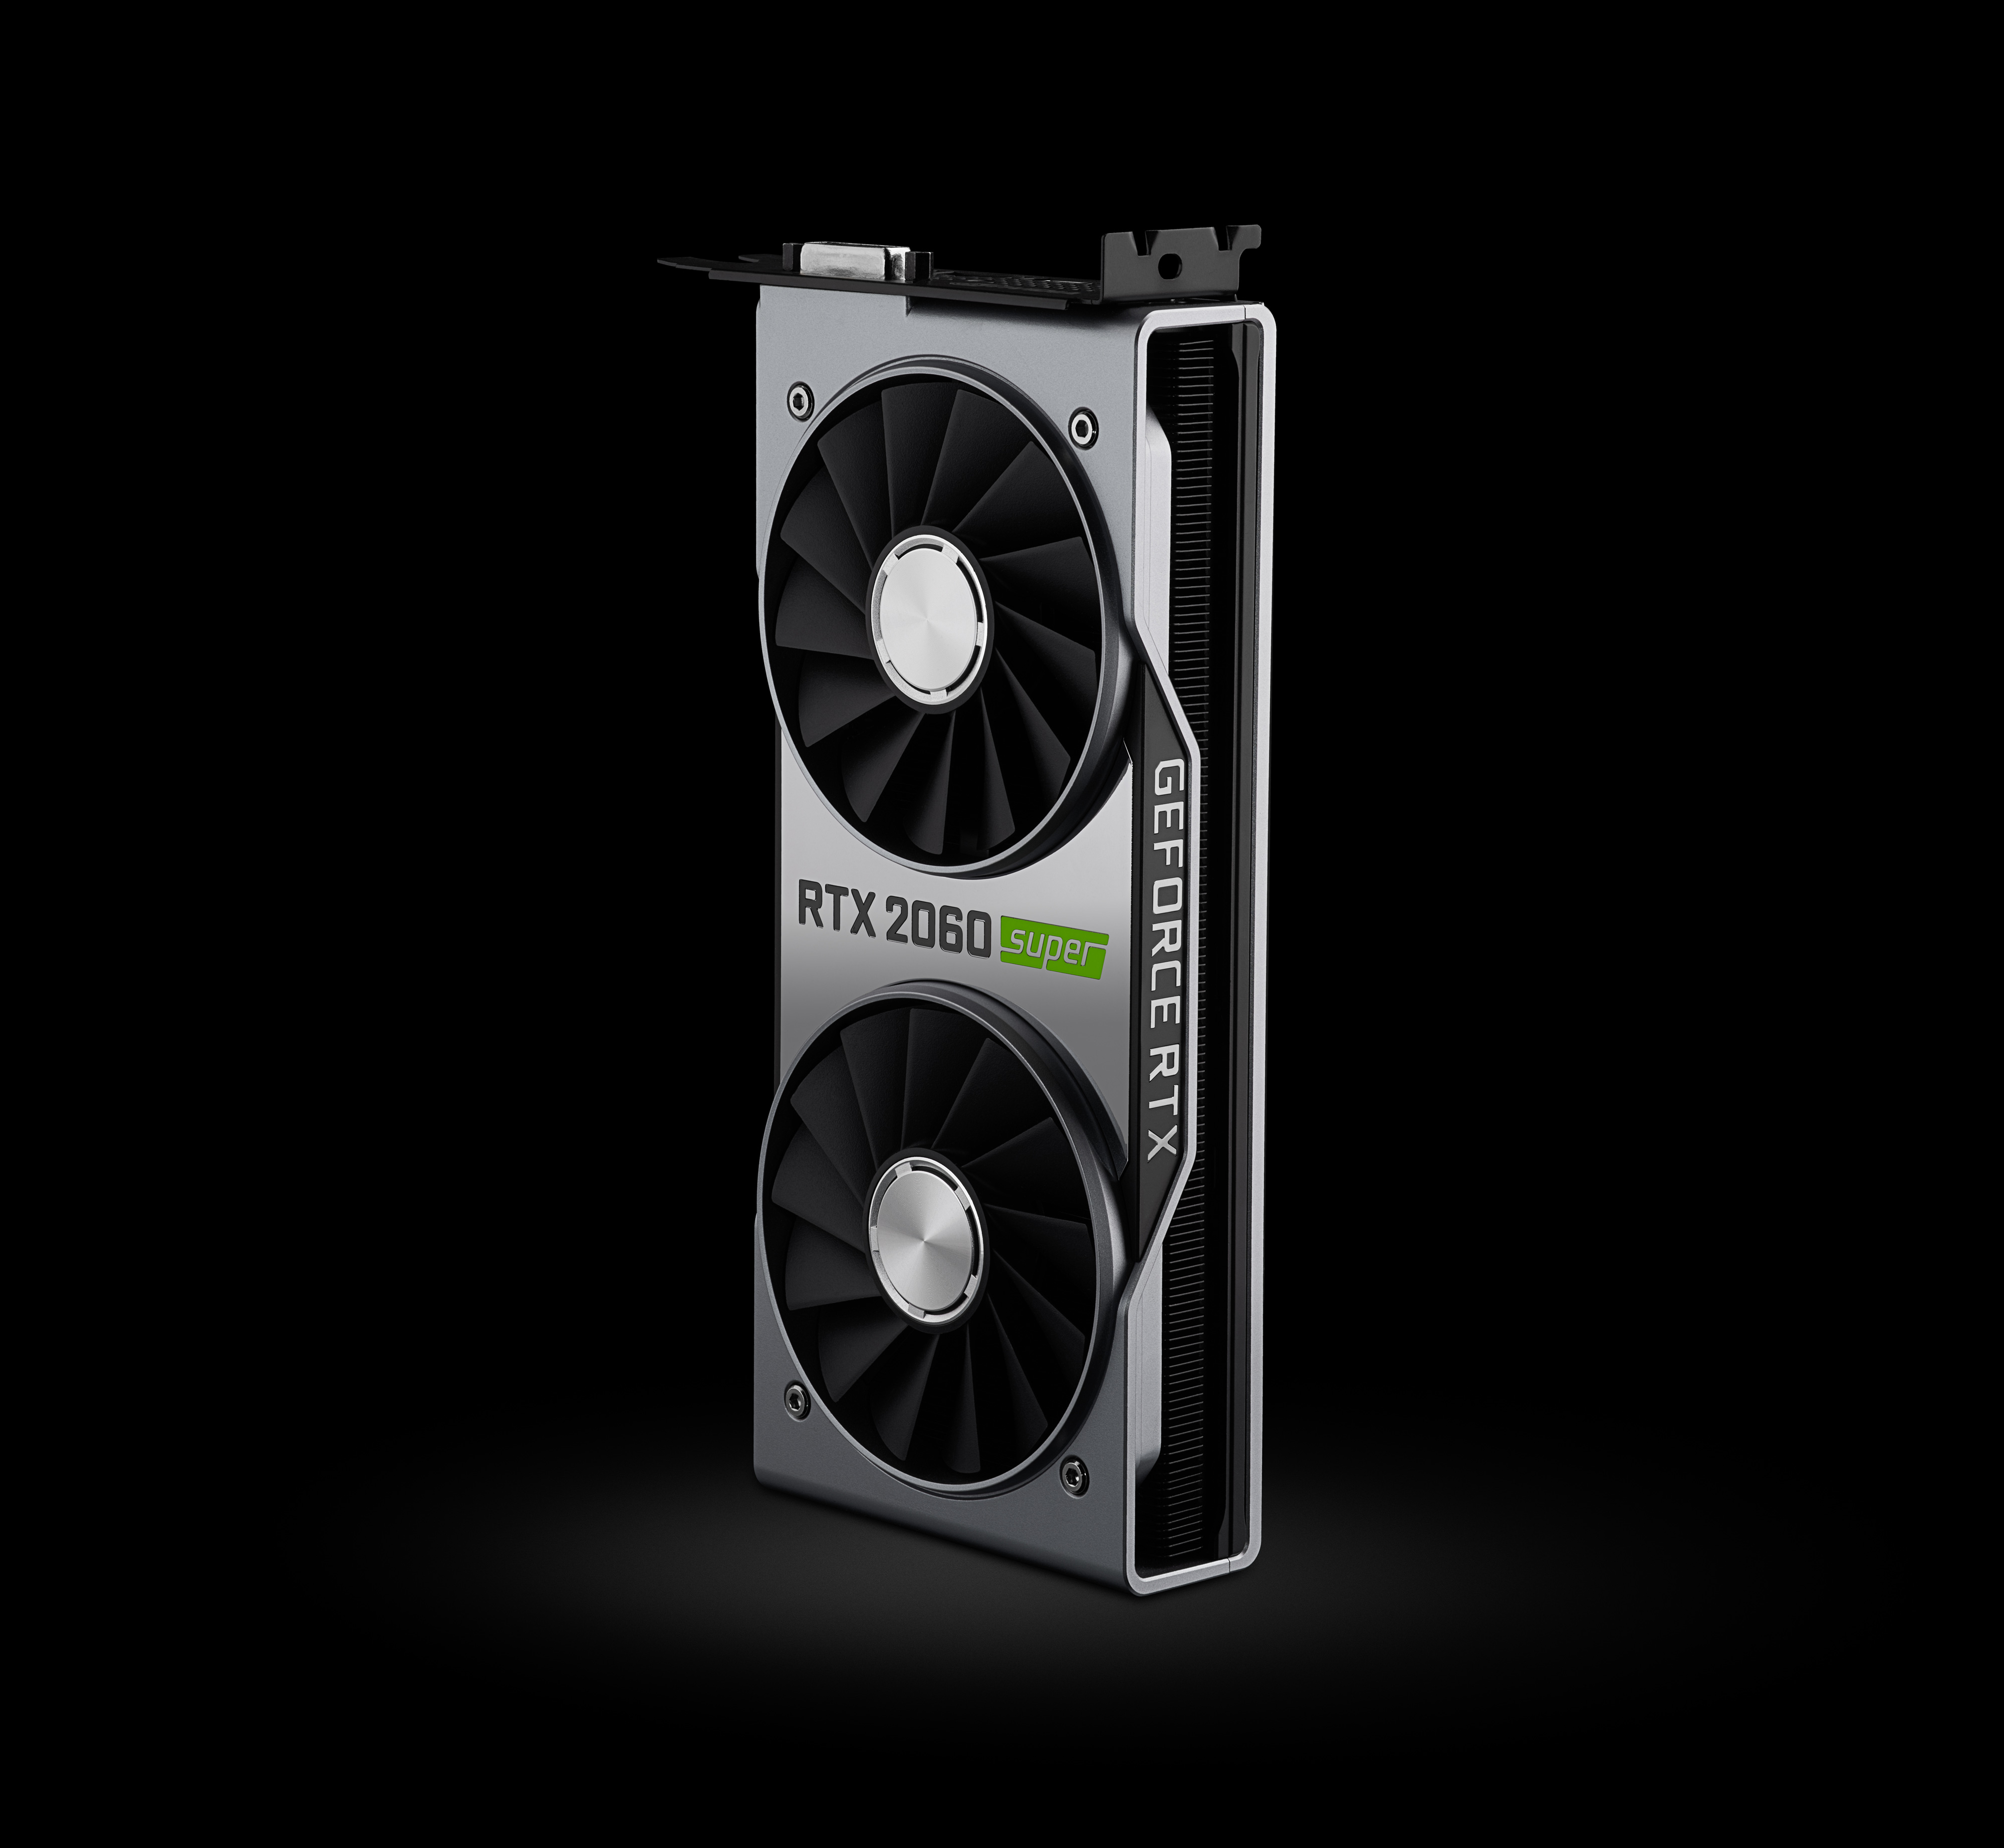 Meet the GeForce RTX 2070 Super & RTX 2060 Super - The NVIDIA